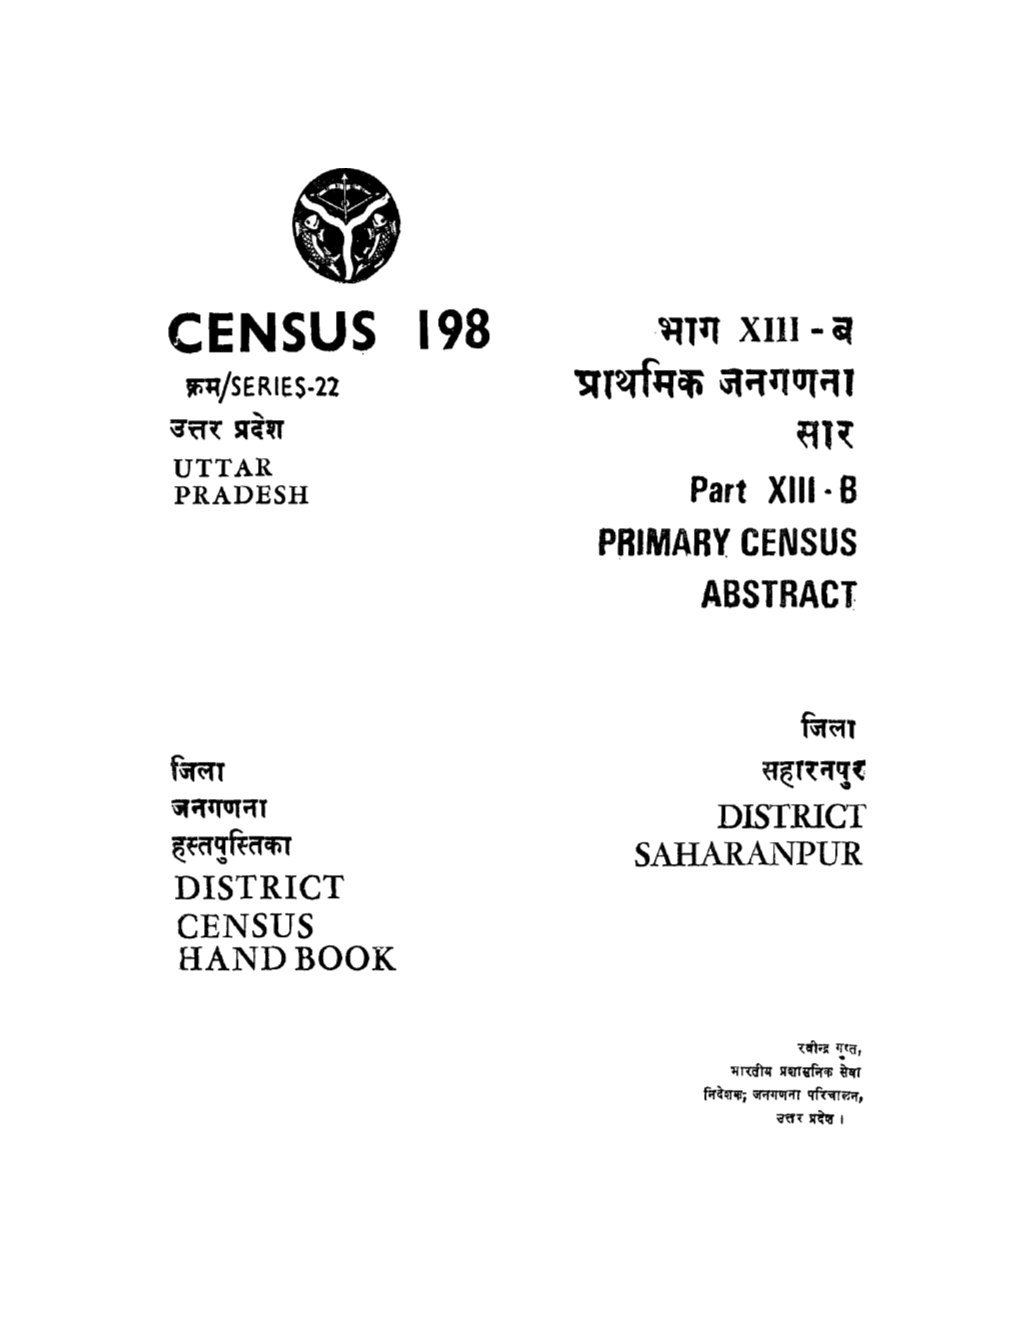 District Census Handbook, Saharanpur, Part XIII-B, Series-22